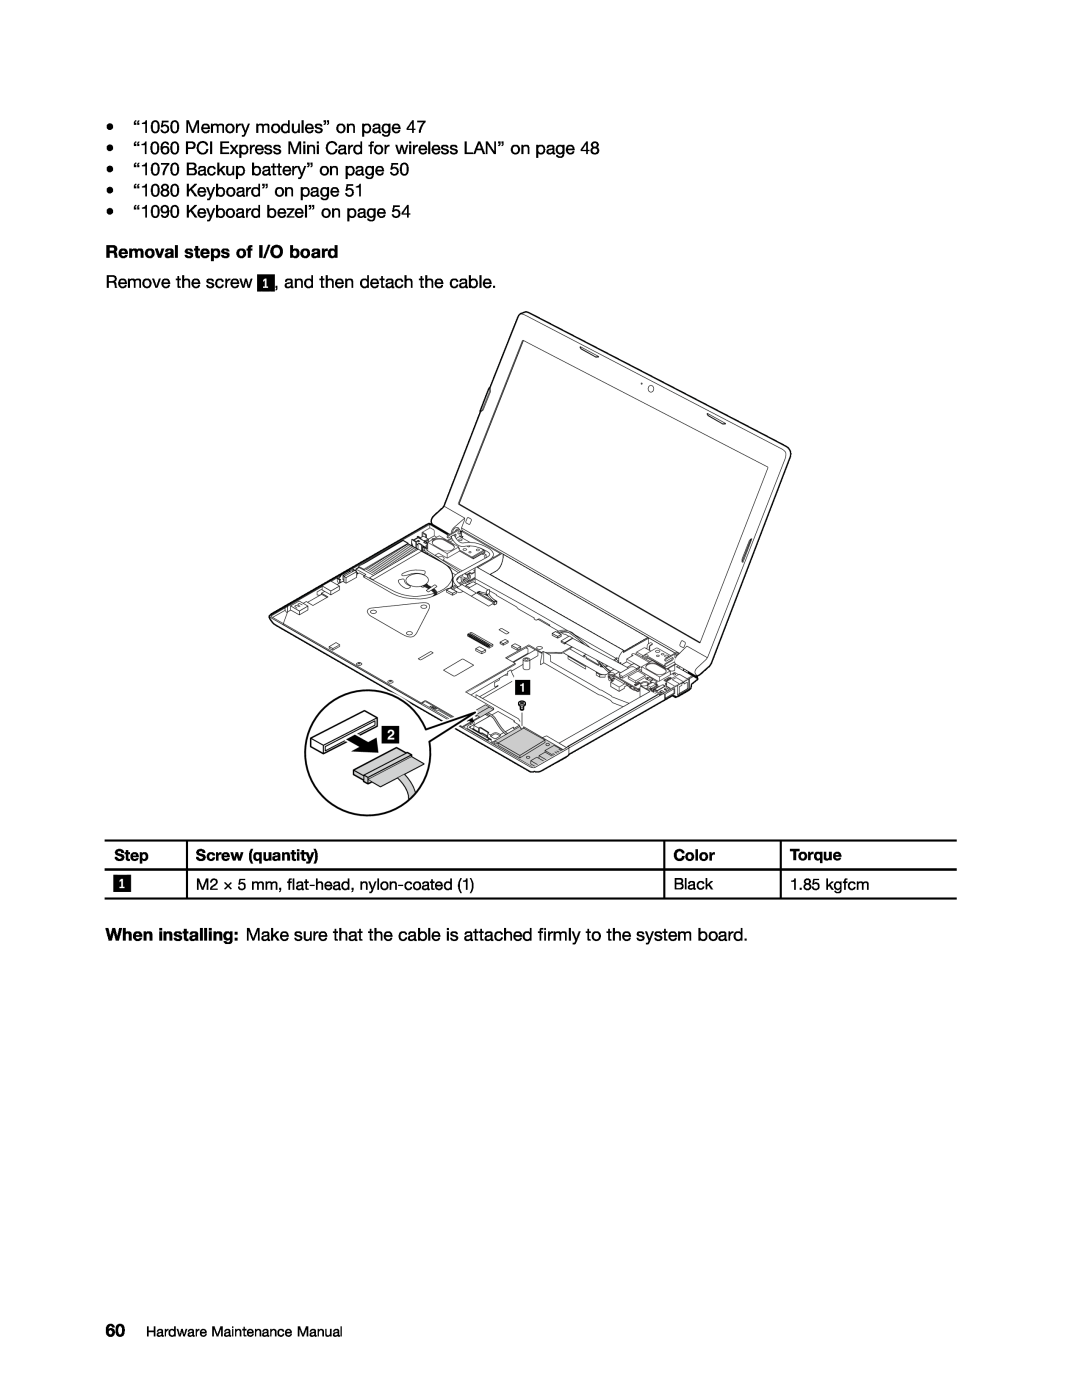 Lenovo B575E manual Removal steps of I/O board, Hardware Maintenance Manual 